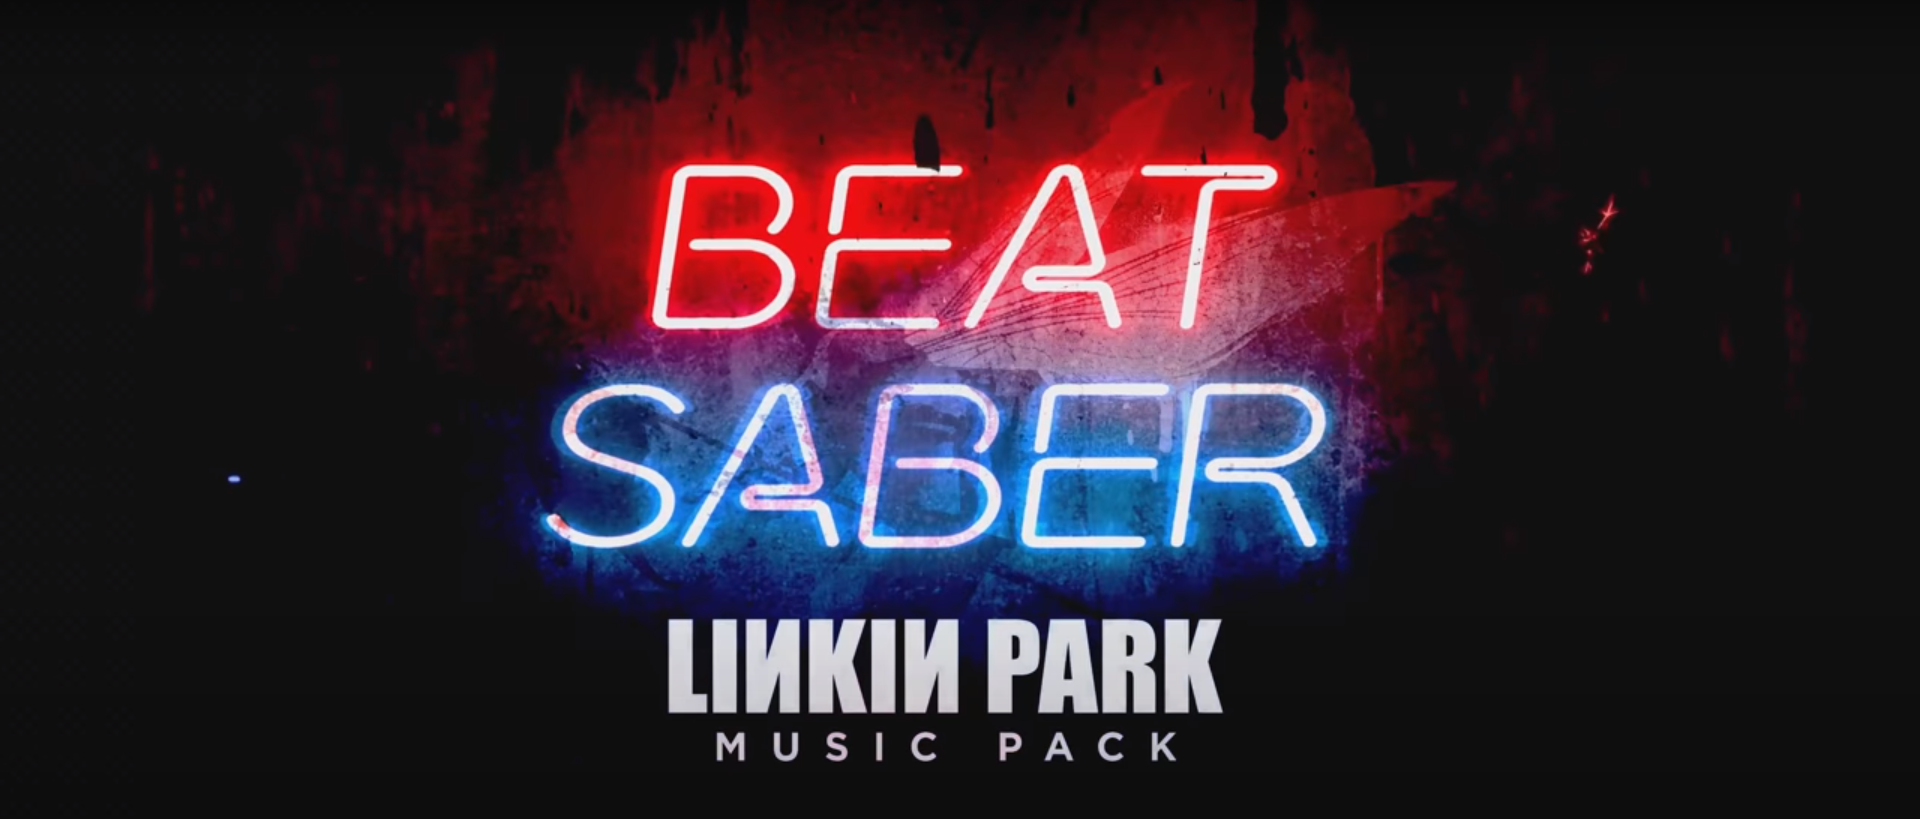 Beat Saber Linkin Park Music Pack